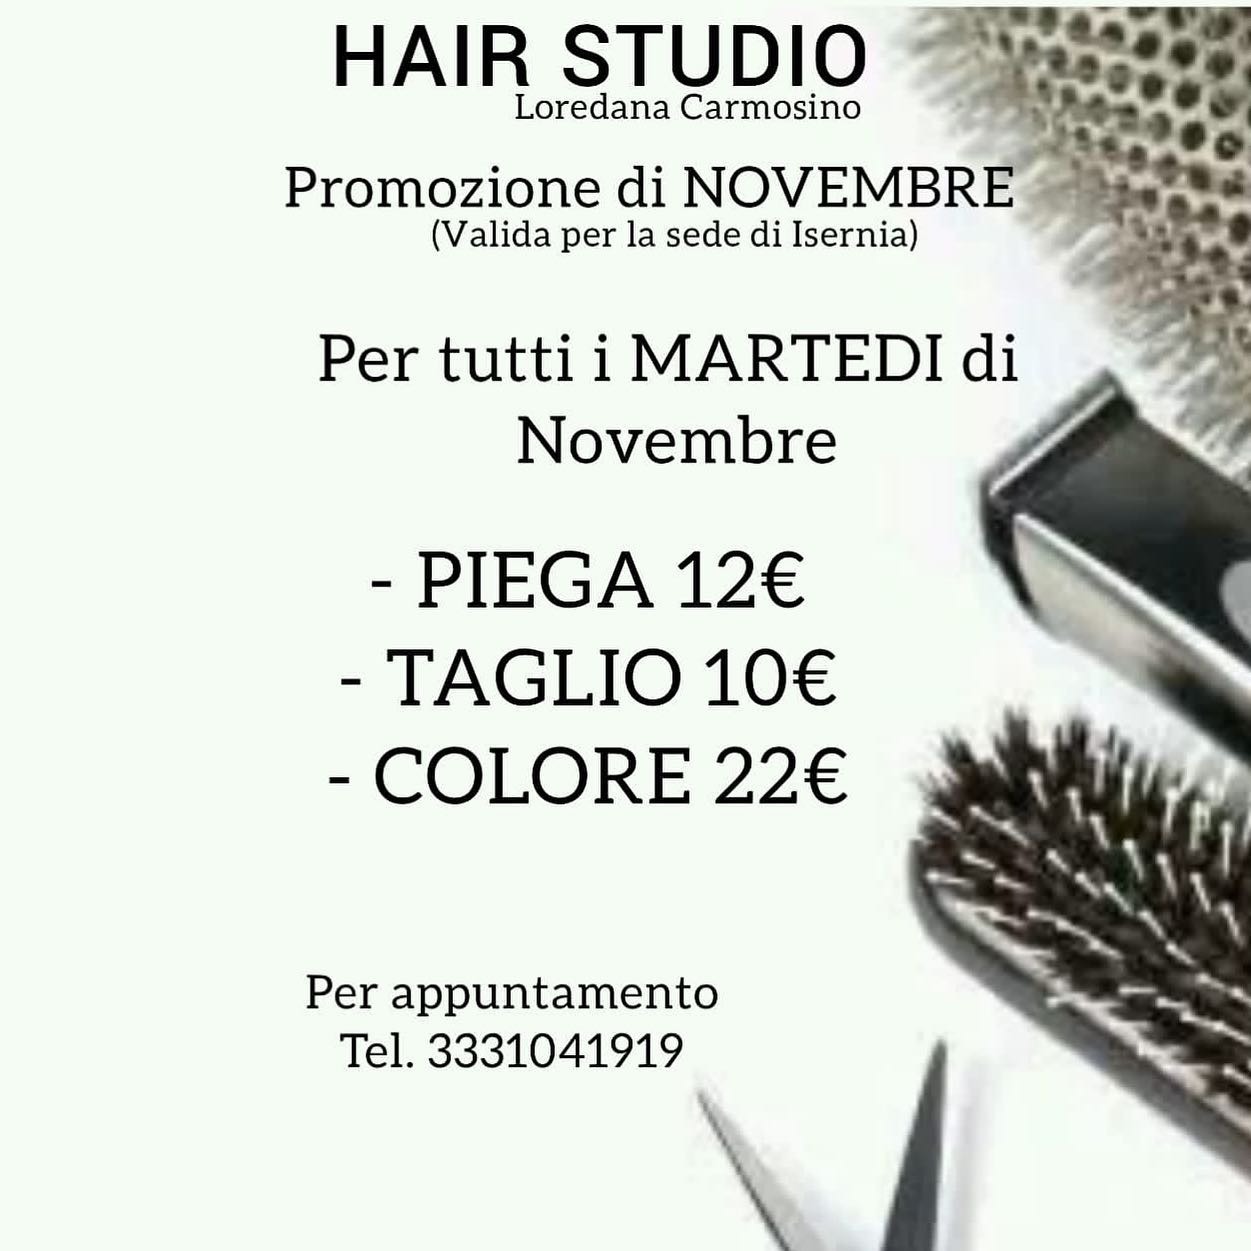 HairStudio Promo Novembre